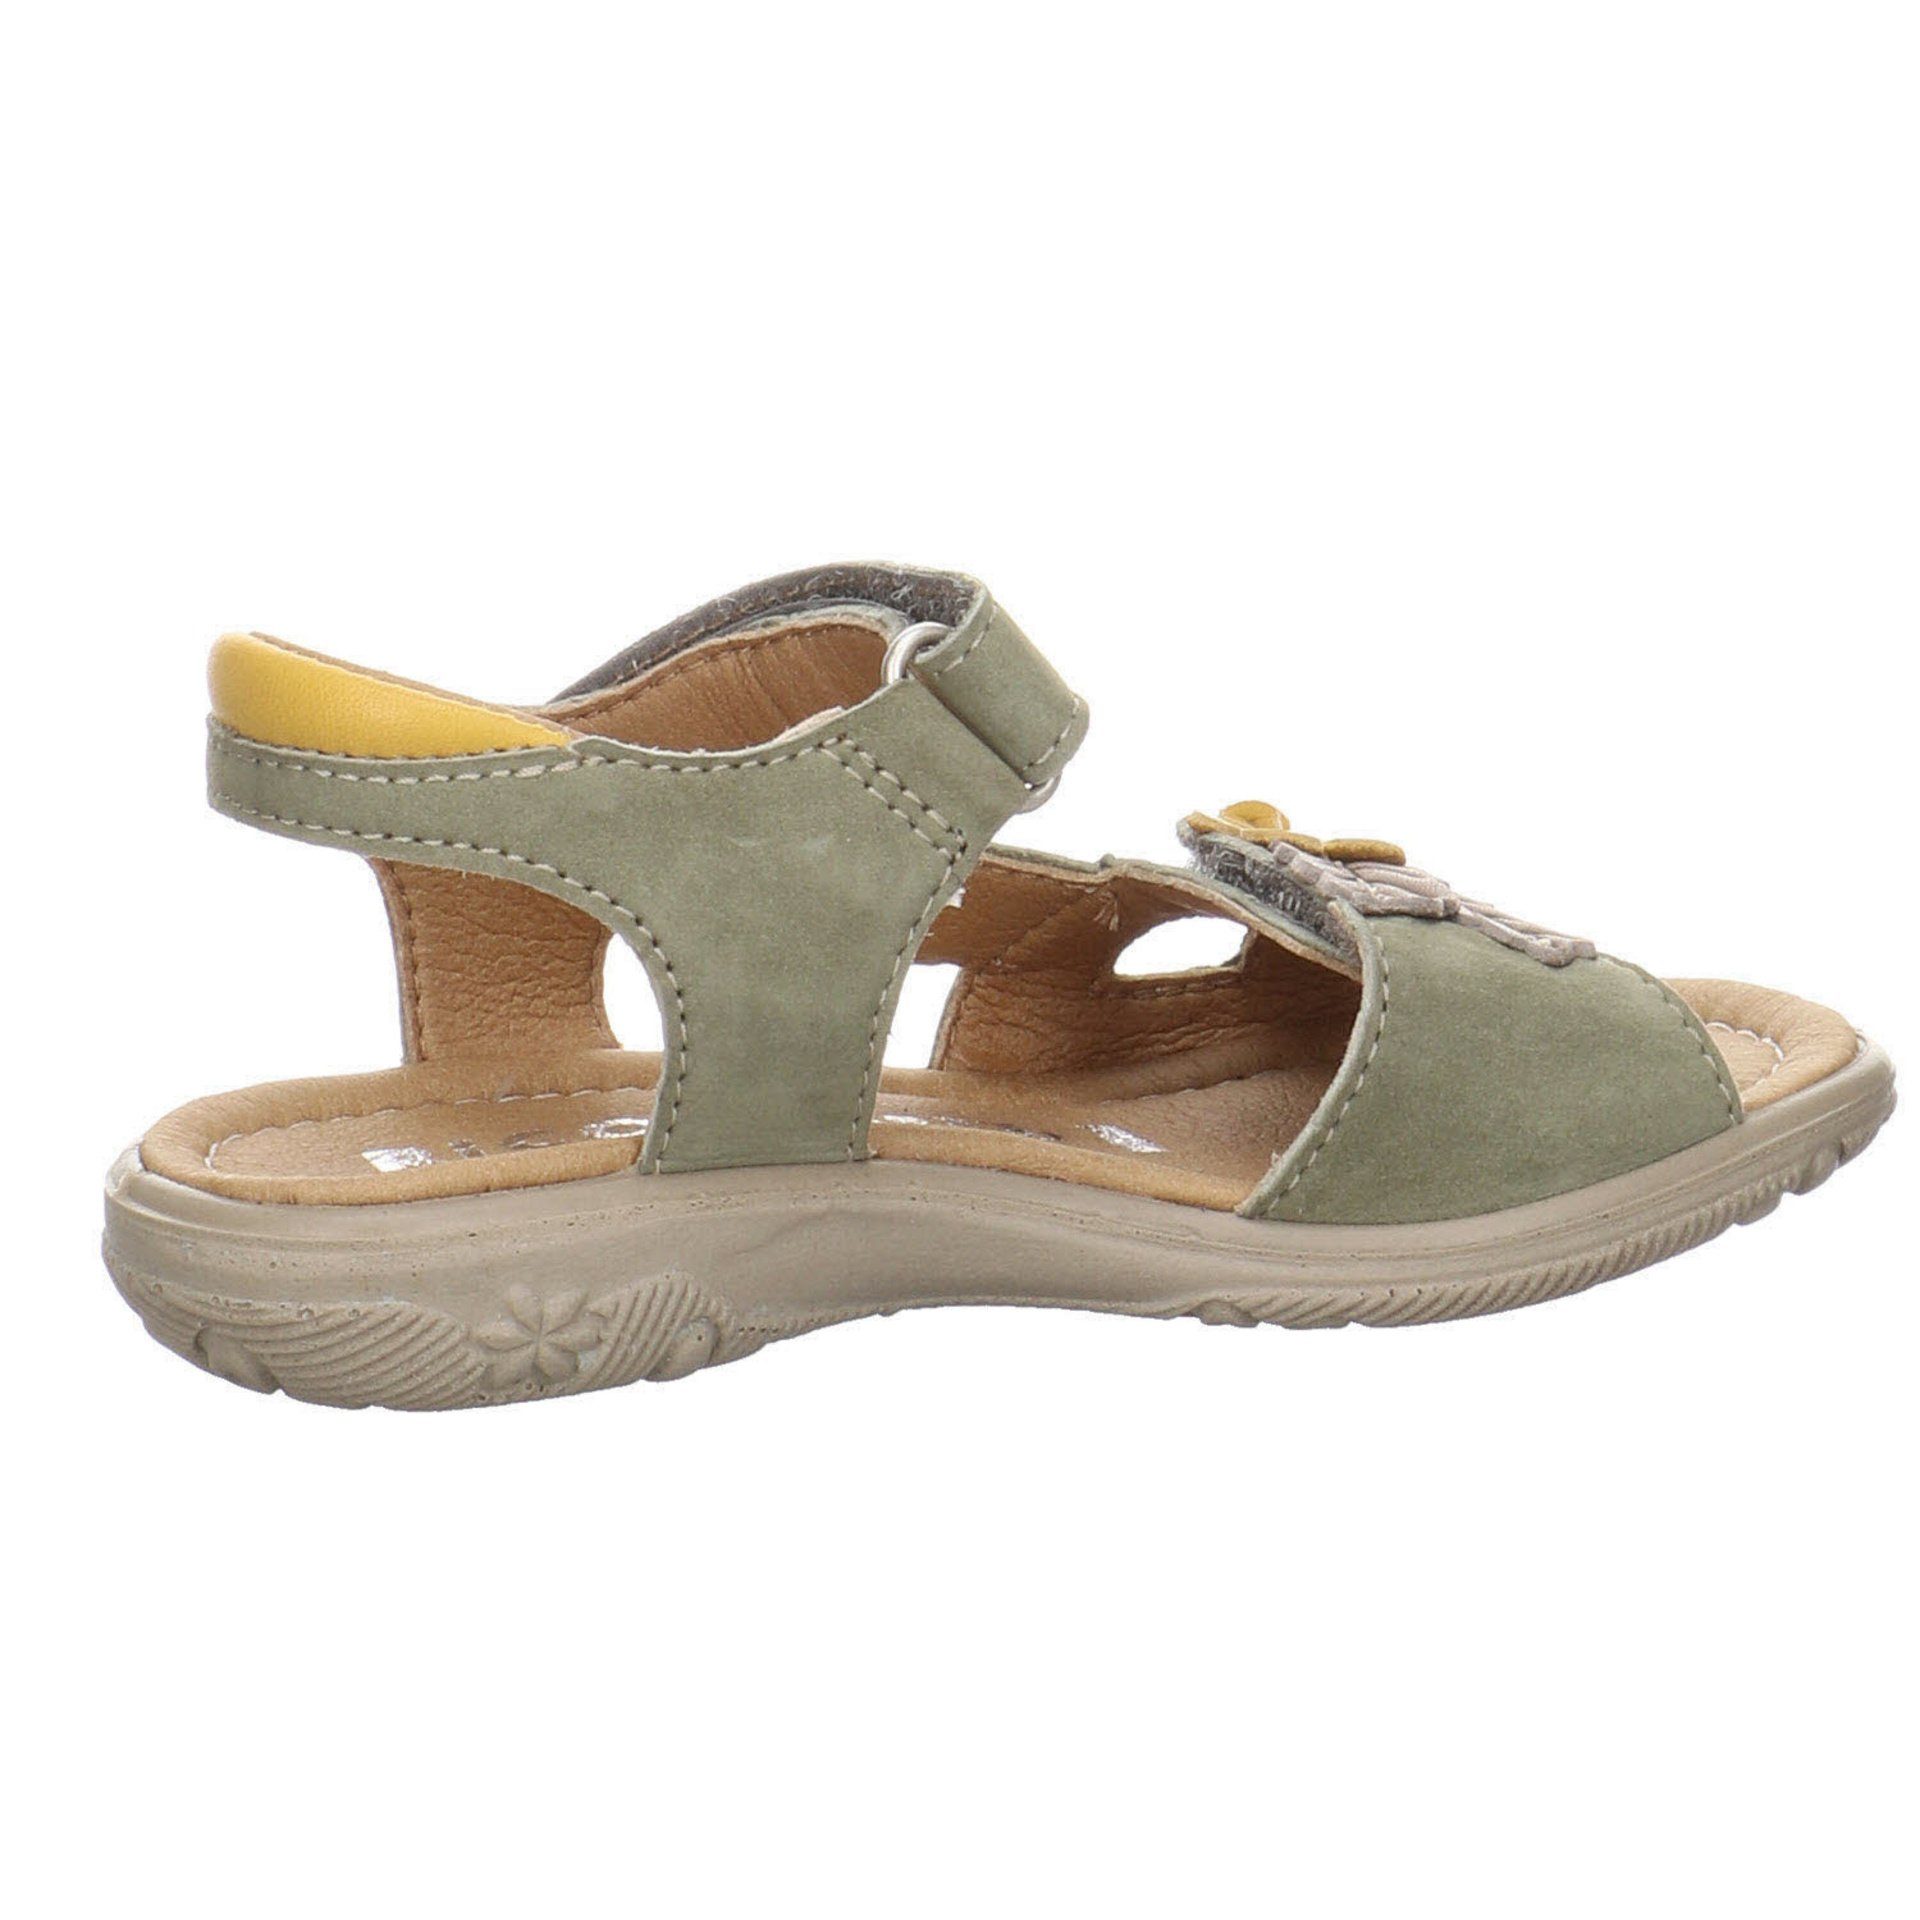 Cilla Sandale eukalyptus Kinderschuhe Sandale Schuhe Ricosta Sandalen Nubukleder Mädchen